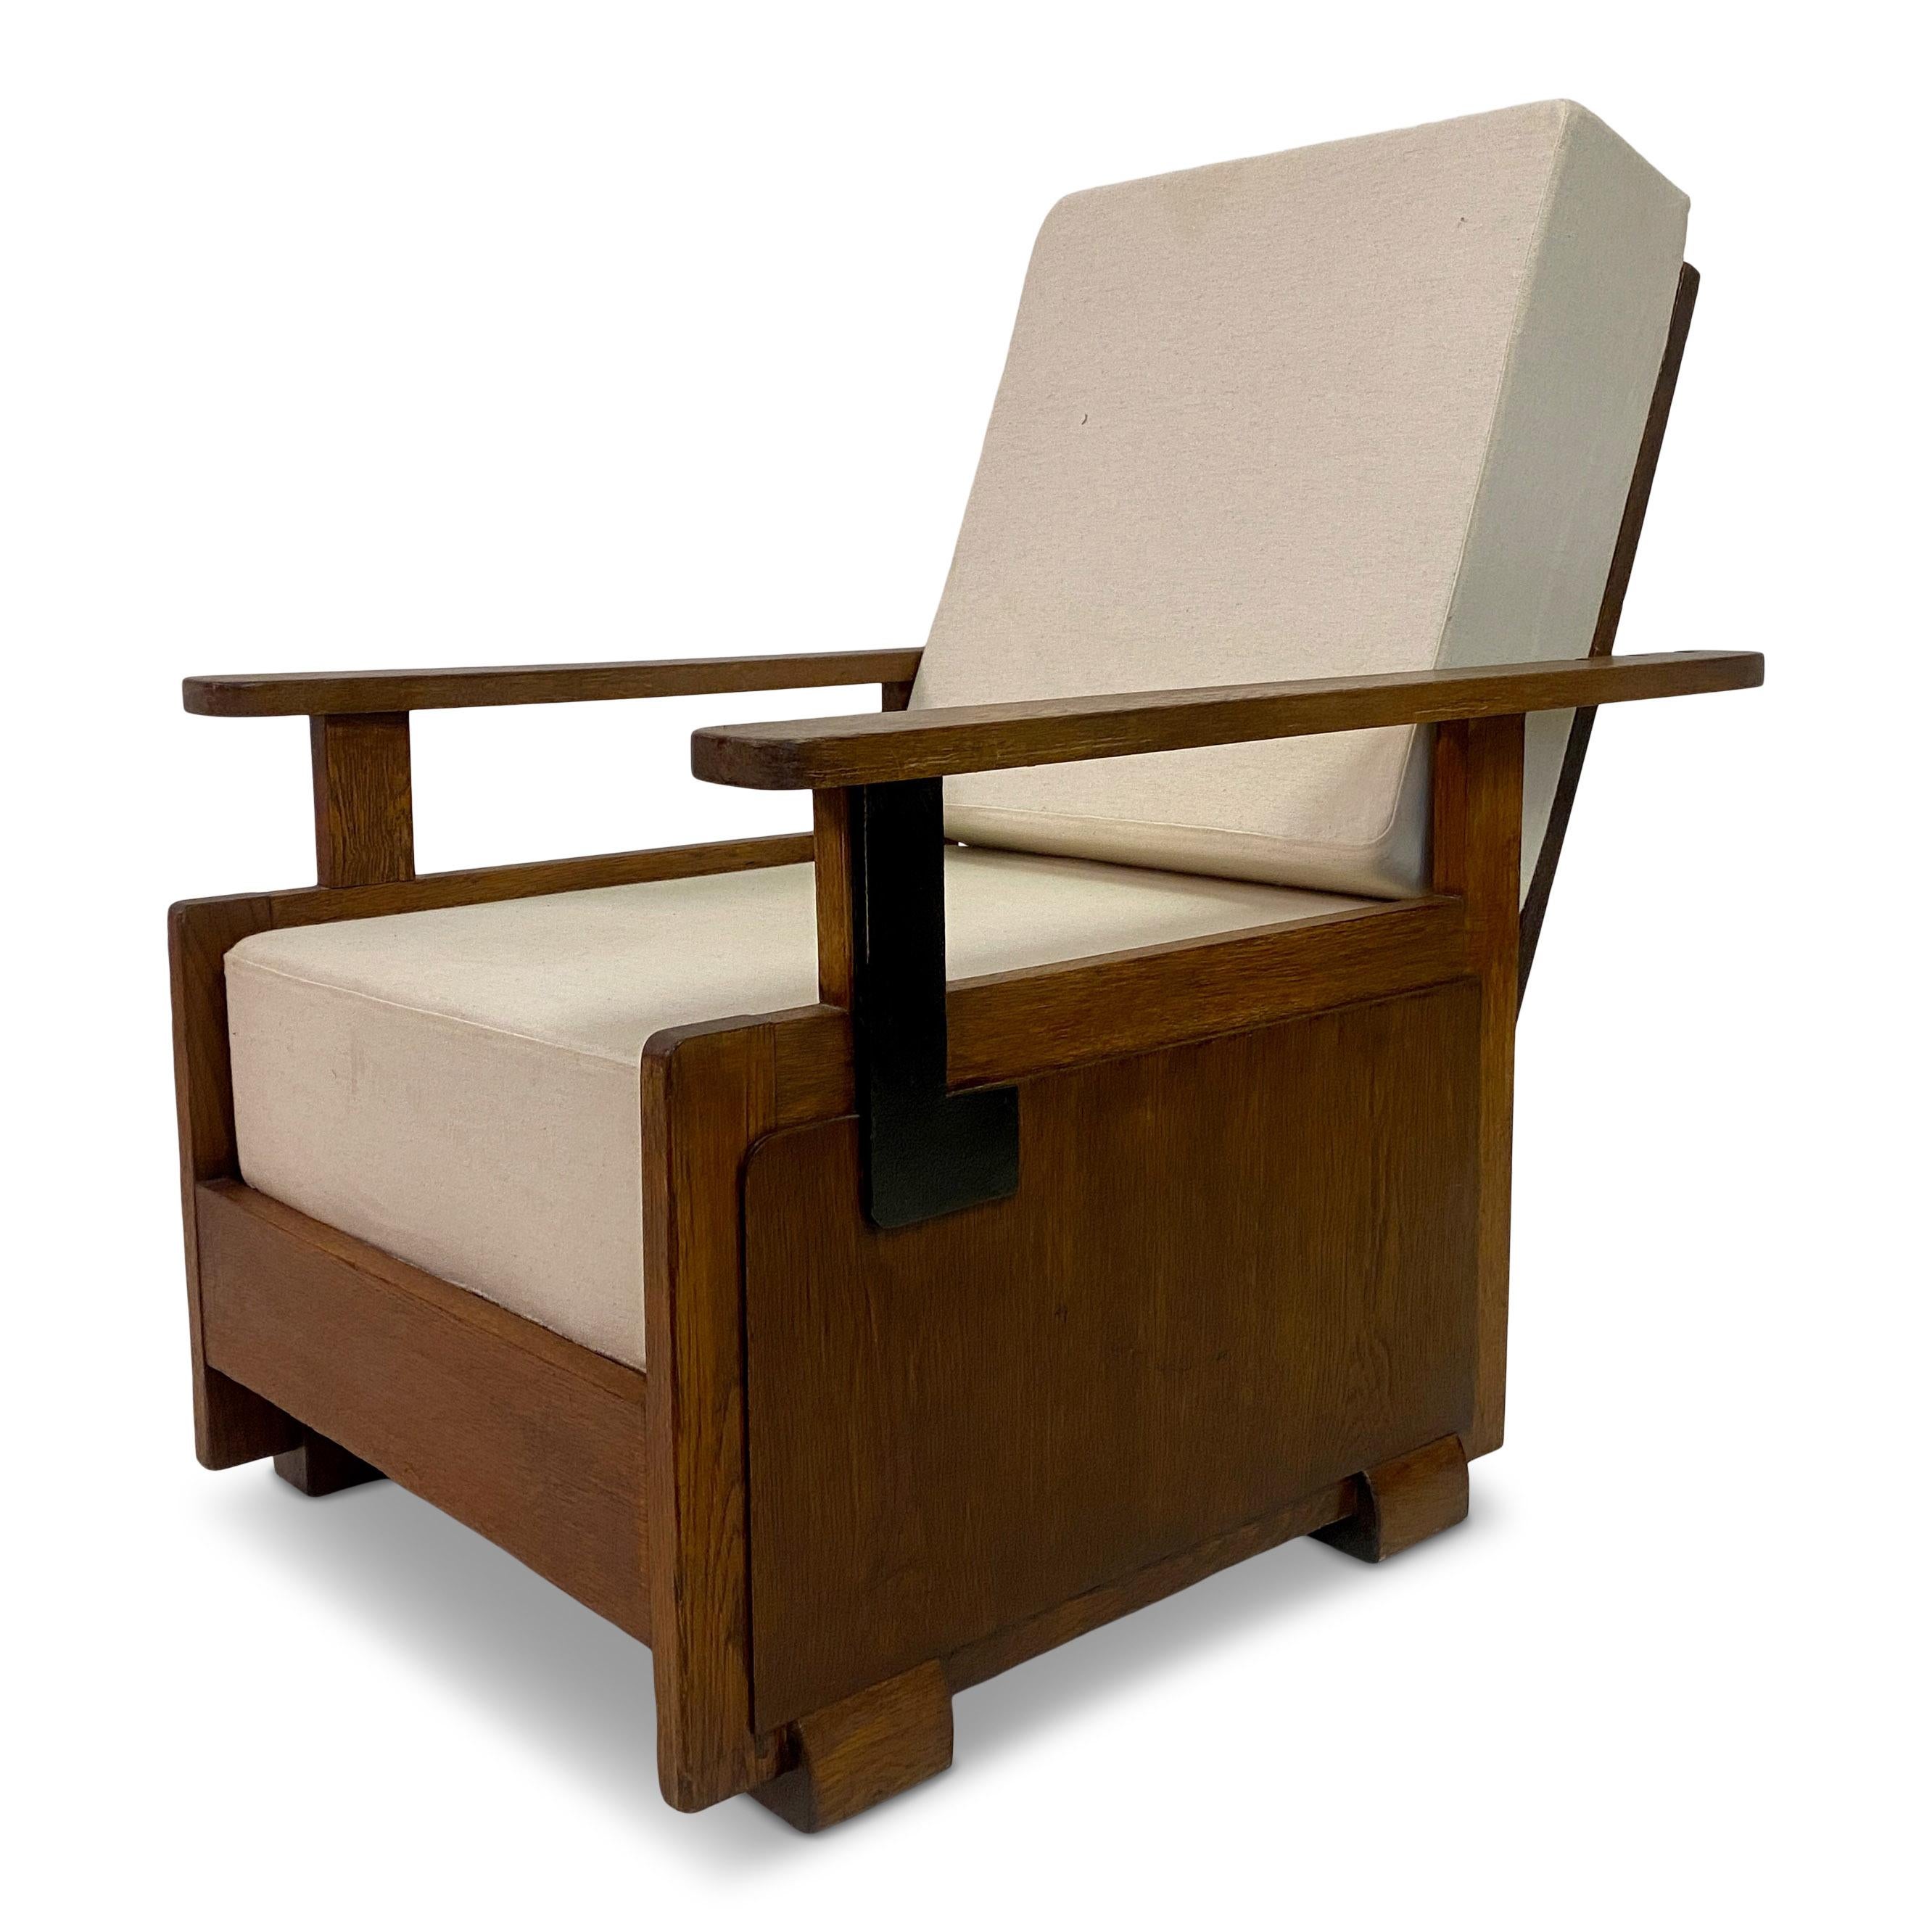 Armchair

Amsterdam school

Oak

Beige fabric upholstery

Adjustable back

Seat height 39cm

Netherlands 1930s